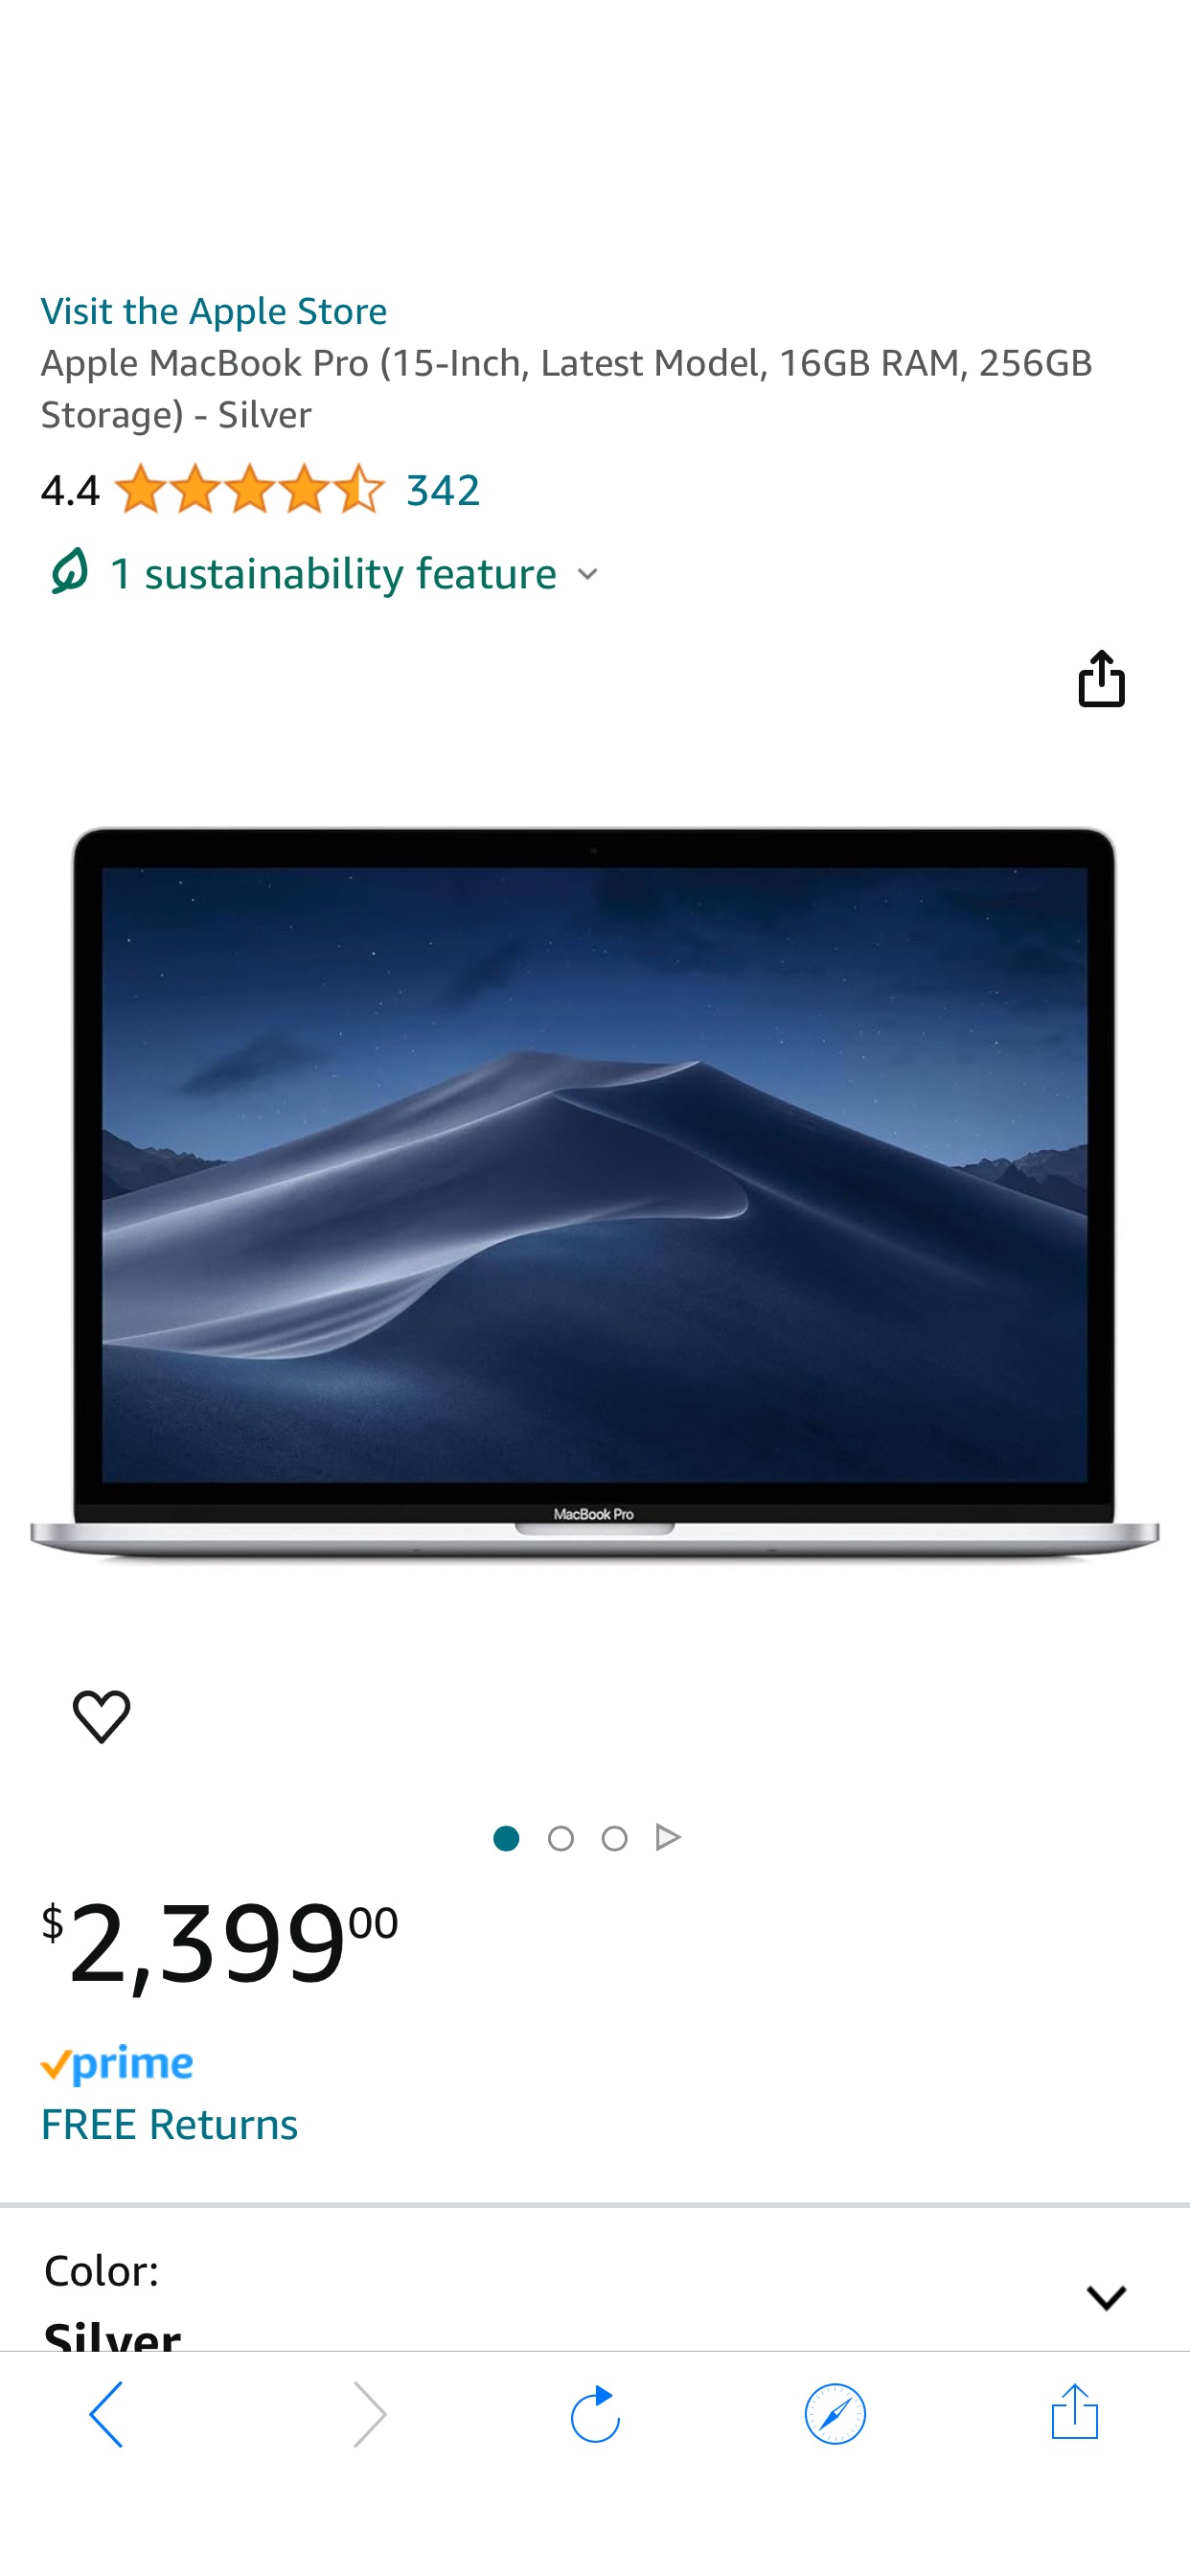 Amazon.com: Apple MacBook Pro (15-Inch, Latest Model, 16GB RAM, 256GB Storage) - Silver : Electronics 苹果电脑 新品抢先看